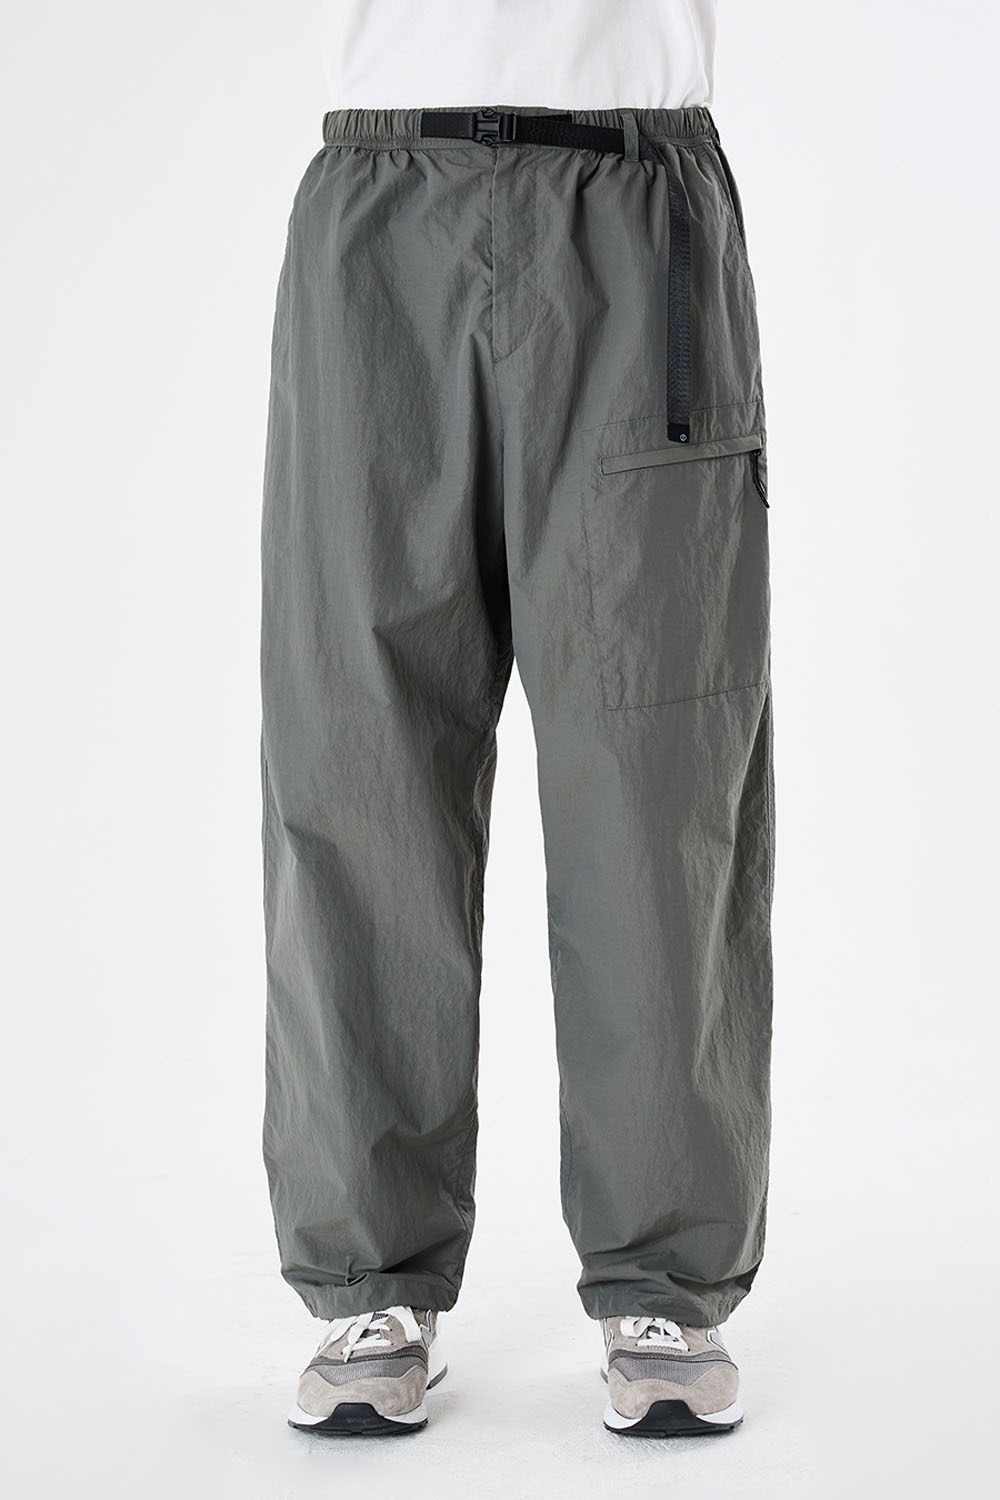 Uniform Pants-Sage Gray Nc